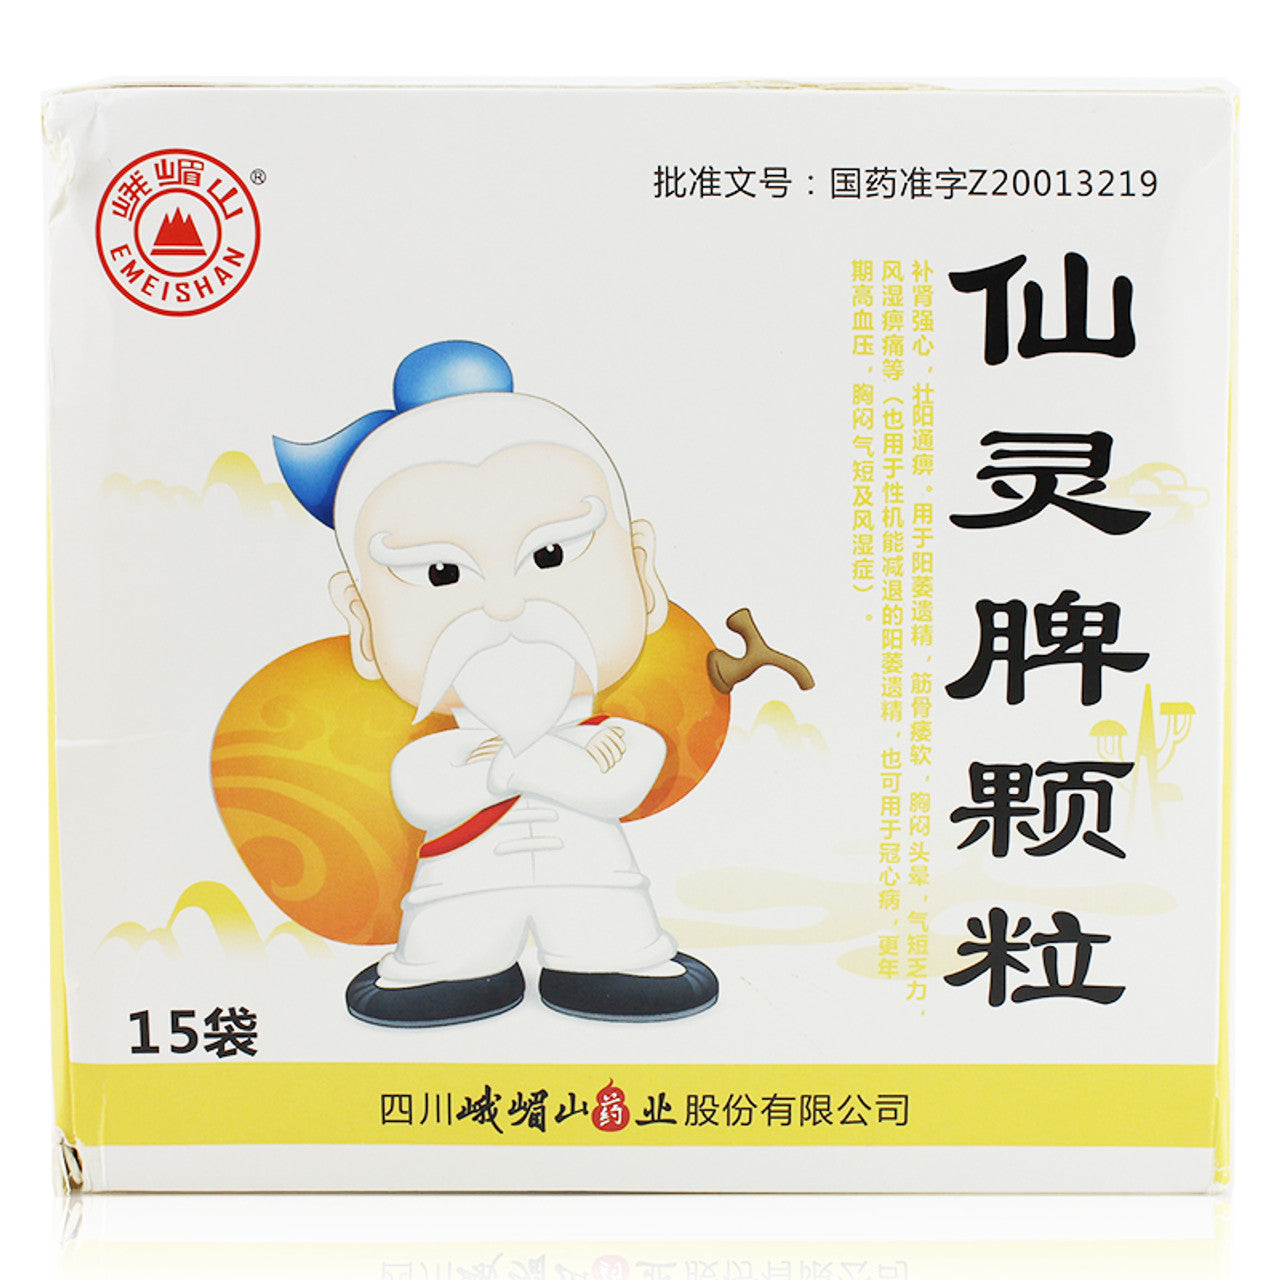 China Herb. Brand EMEISHAN. Xianlingpi Keli or Xianlingpi Granules or Xian Ling Pi Ke Li or Xian Ling Pi Granules or  XIANLINGPIKELI for Tonifying The Kidney Yang.